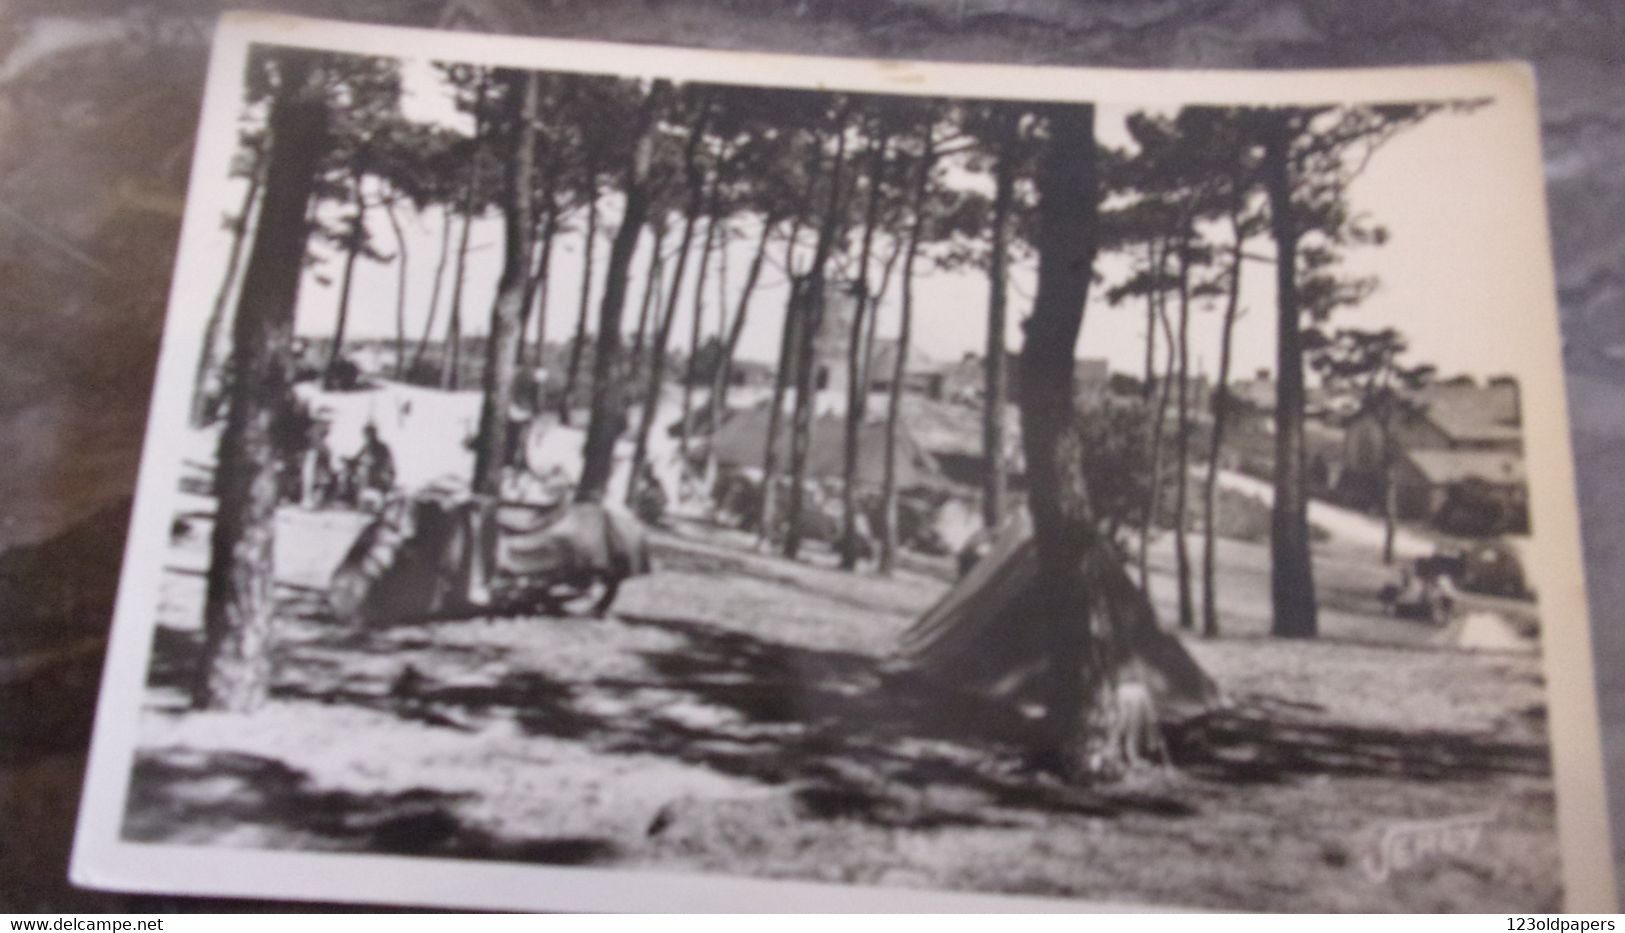 85 VENDEE LA TRANCHE SUR MER CAMPING EN FORET 1956 - La Tranche Sur Mer